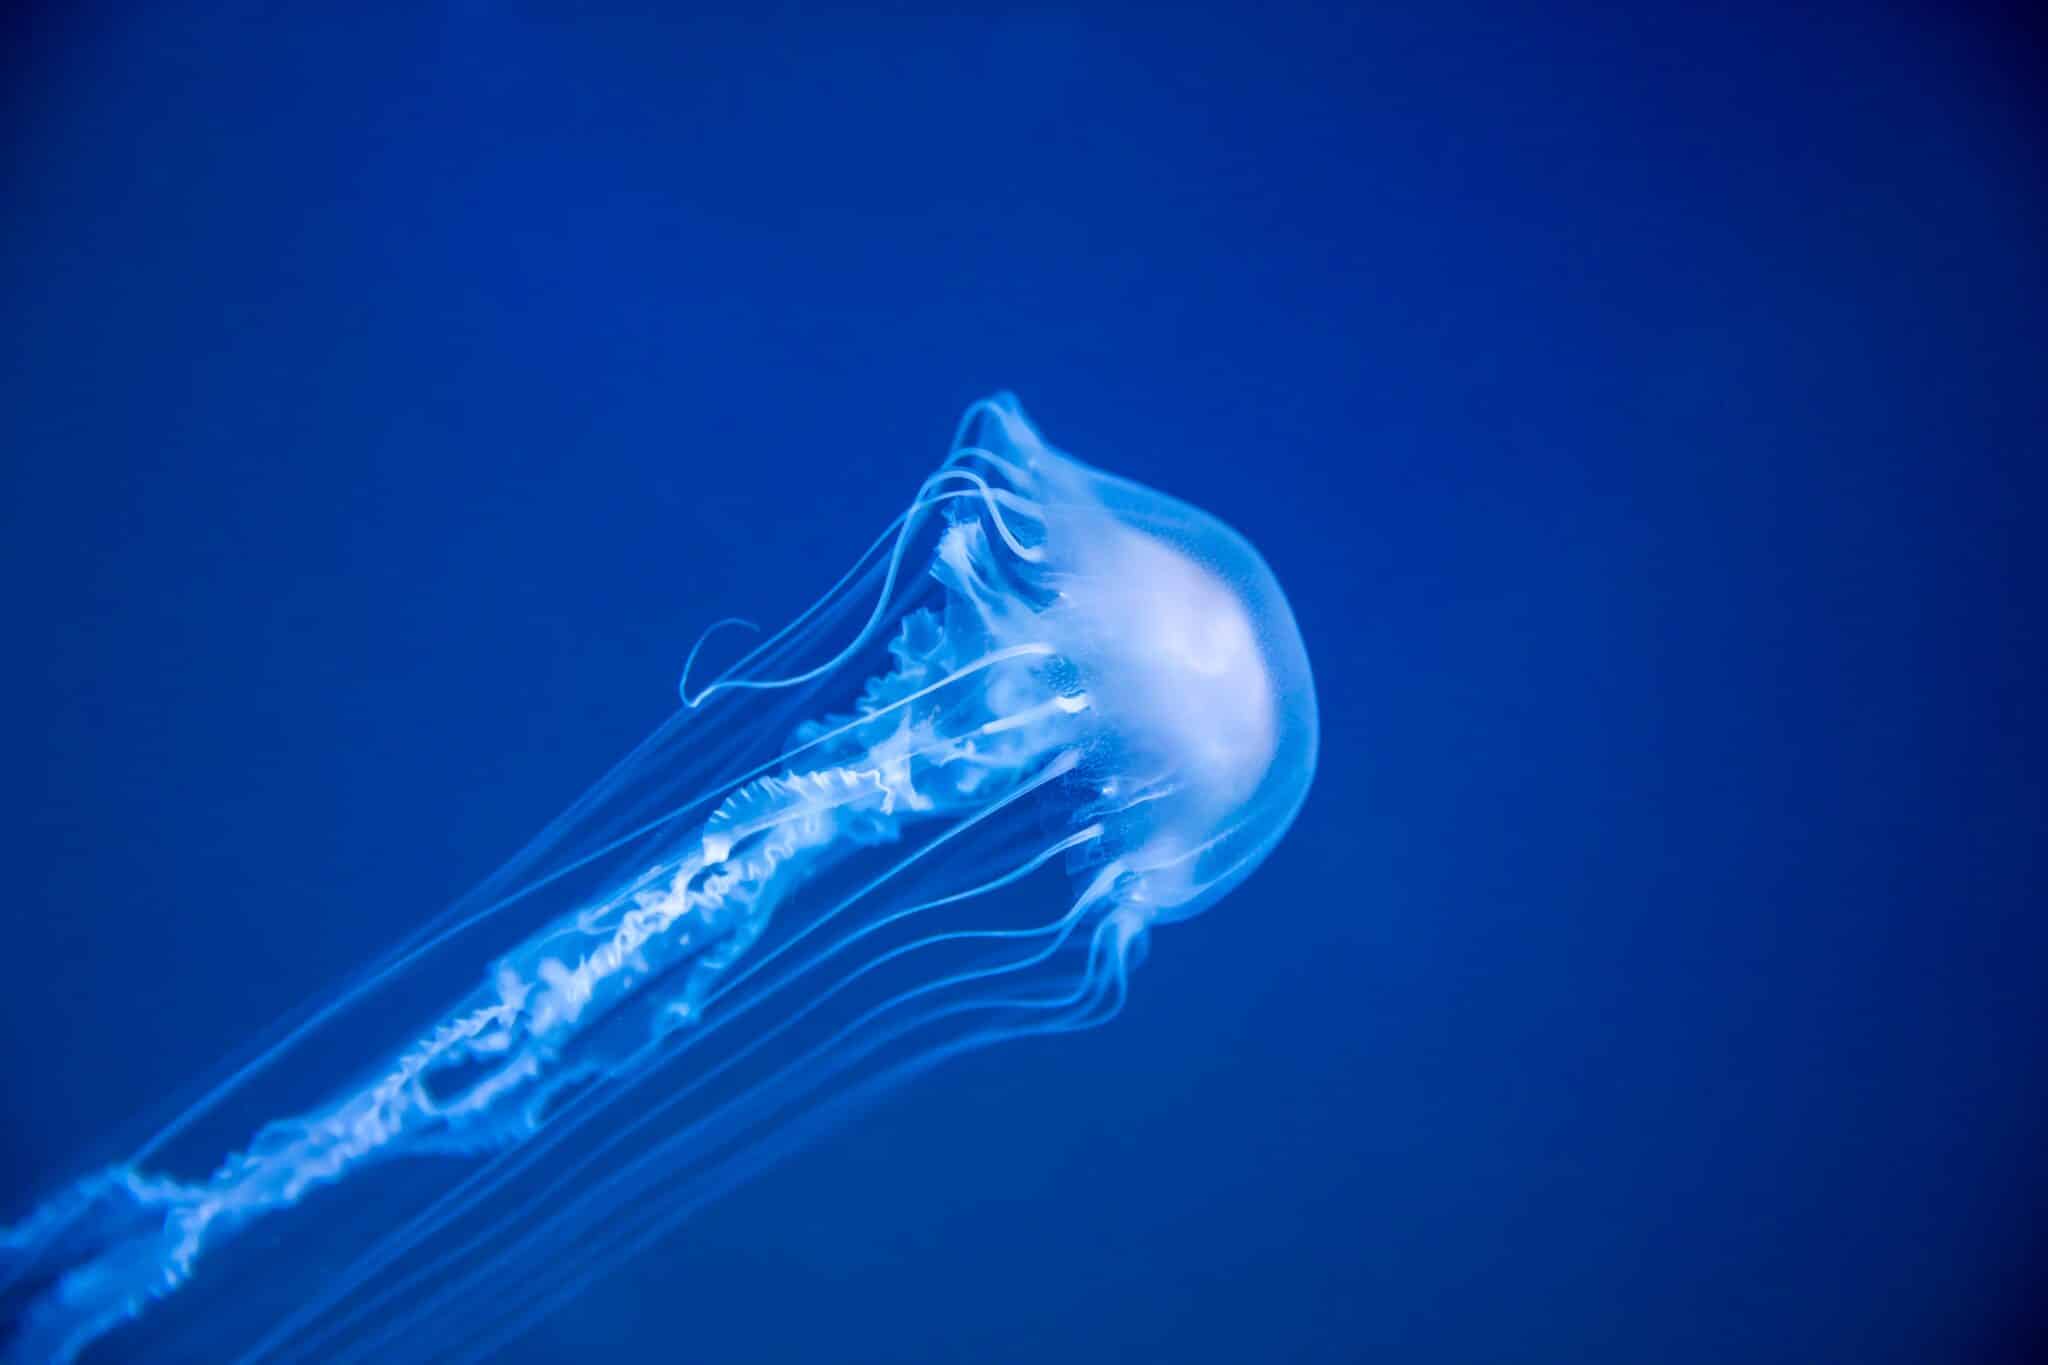  Where Are Box Jellyfish Found